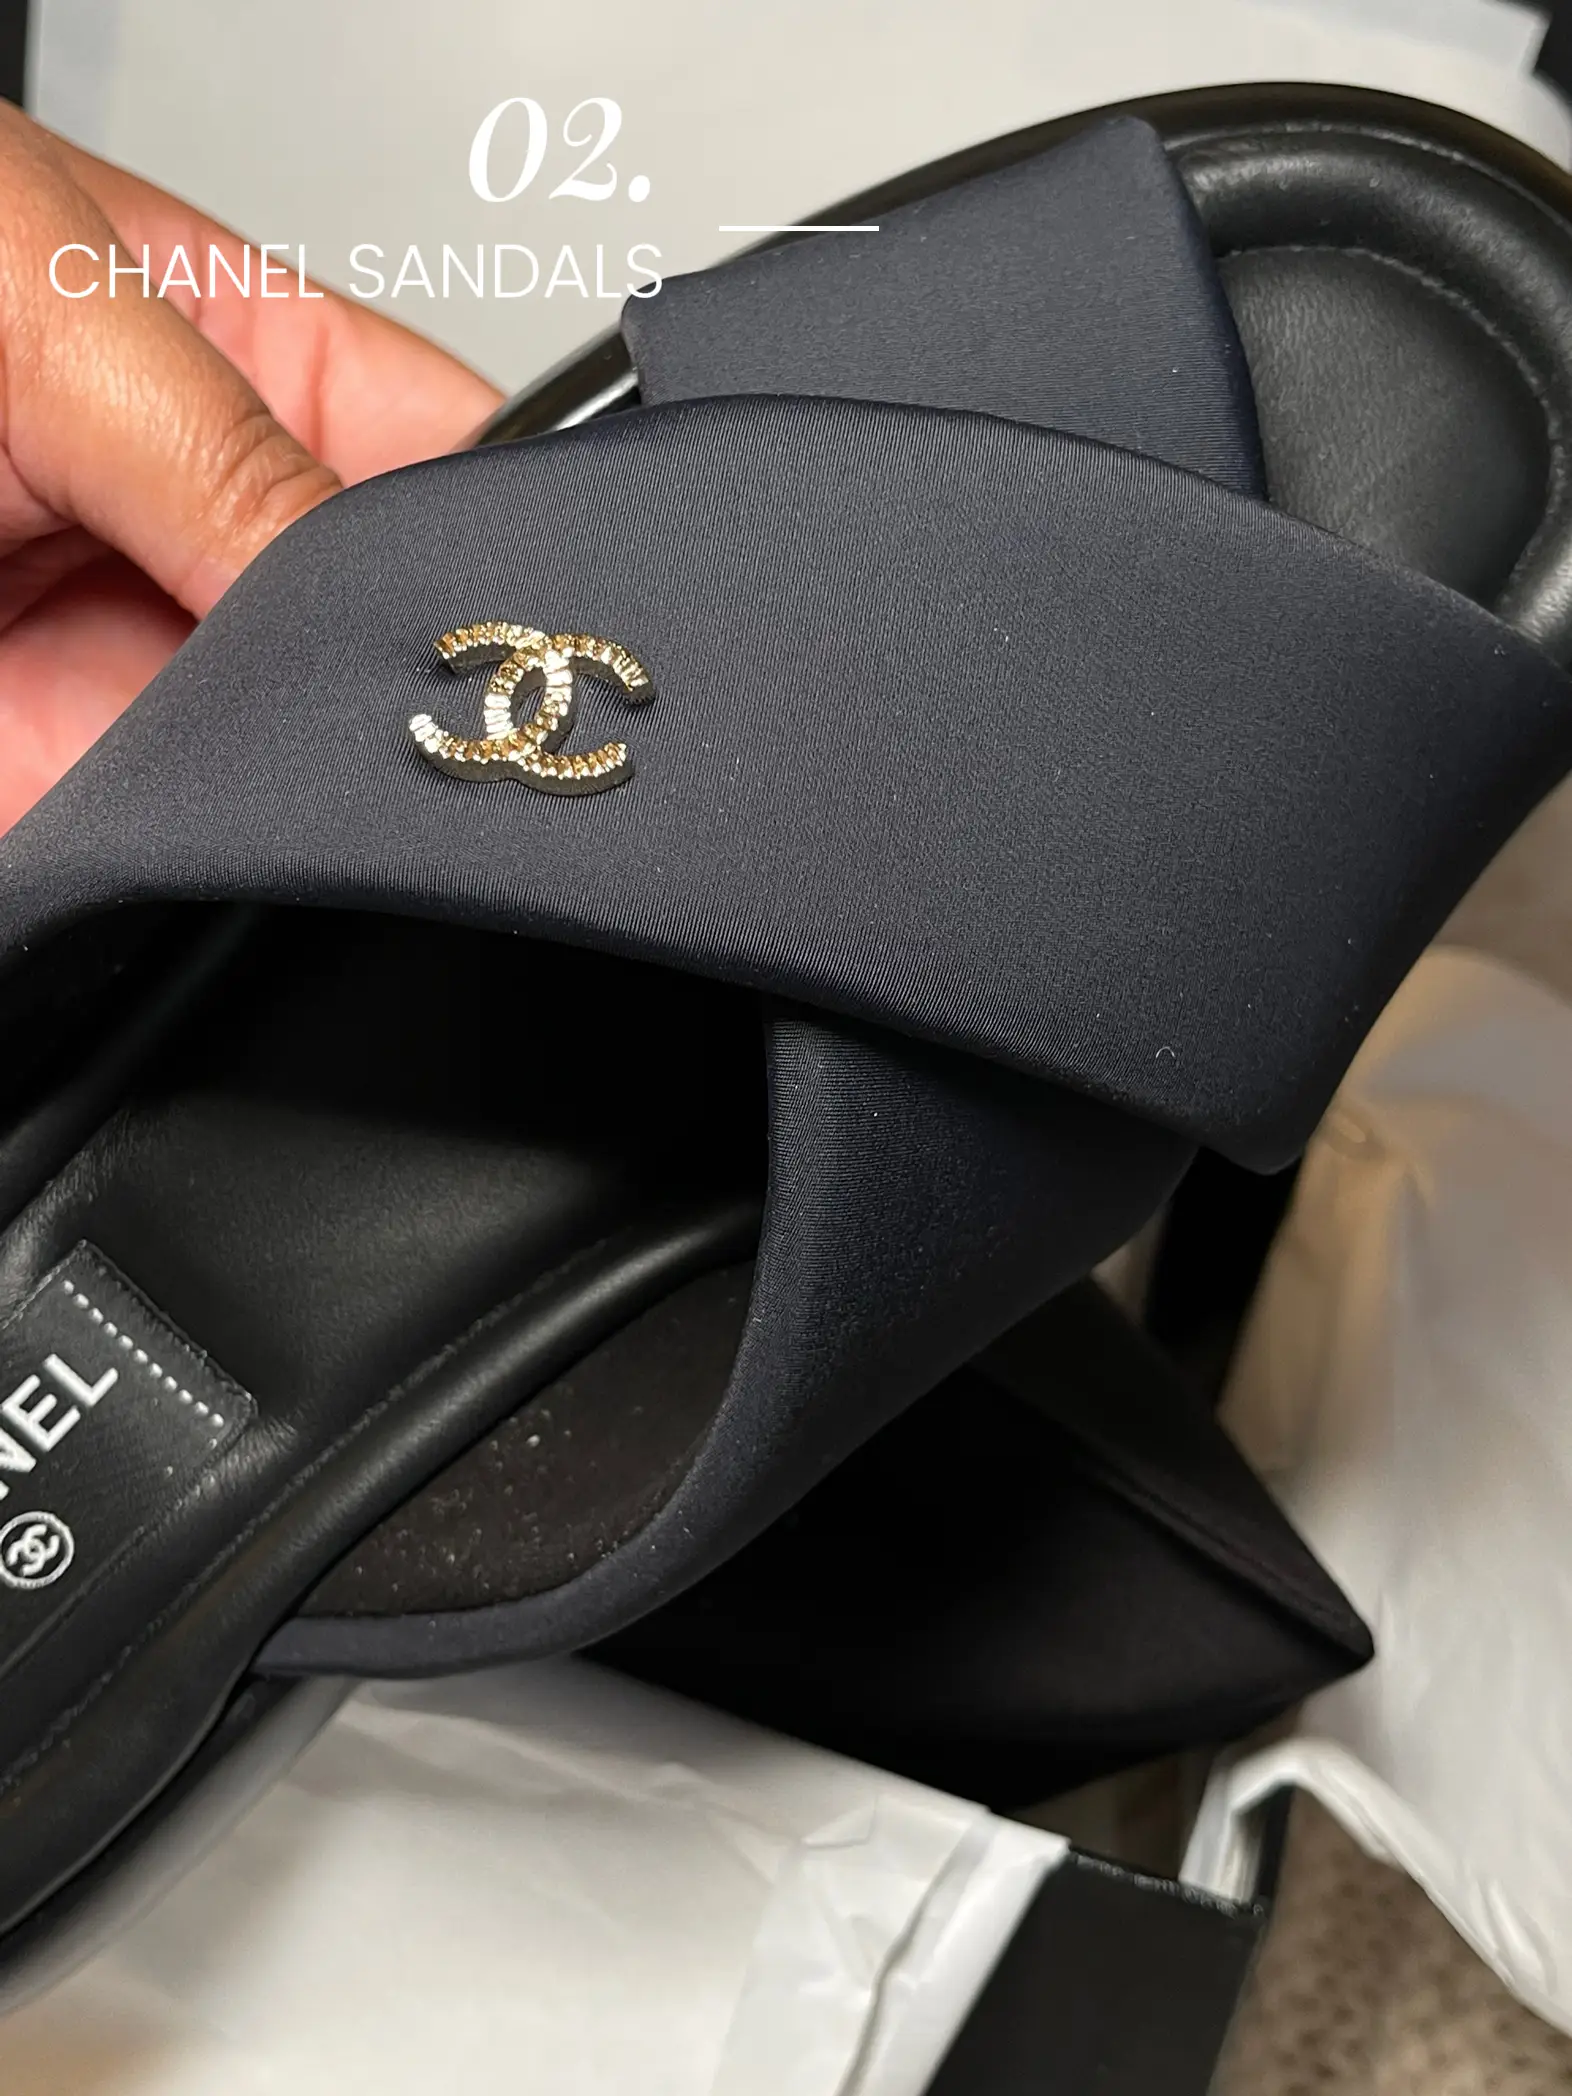 Your favorite designer brand? Mine is Chanel 💎 Follow